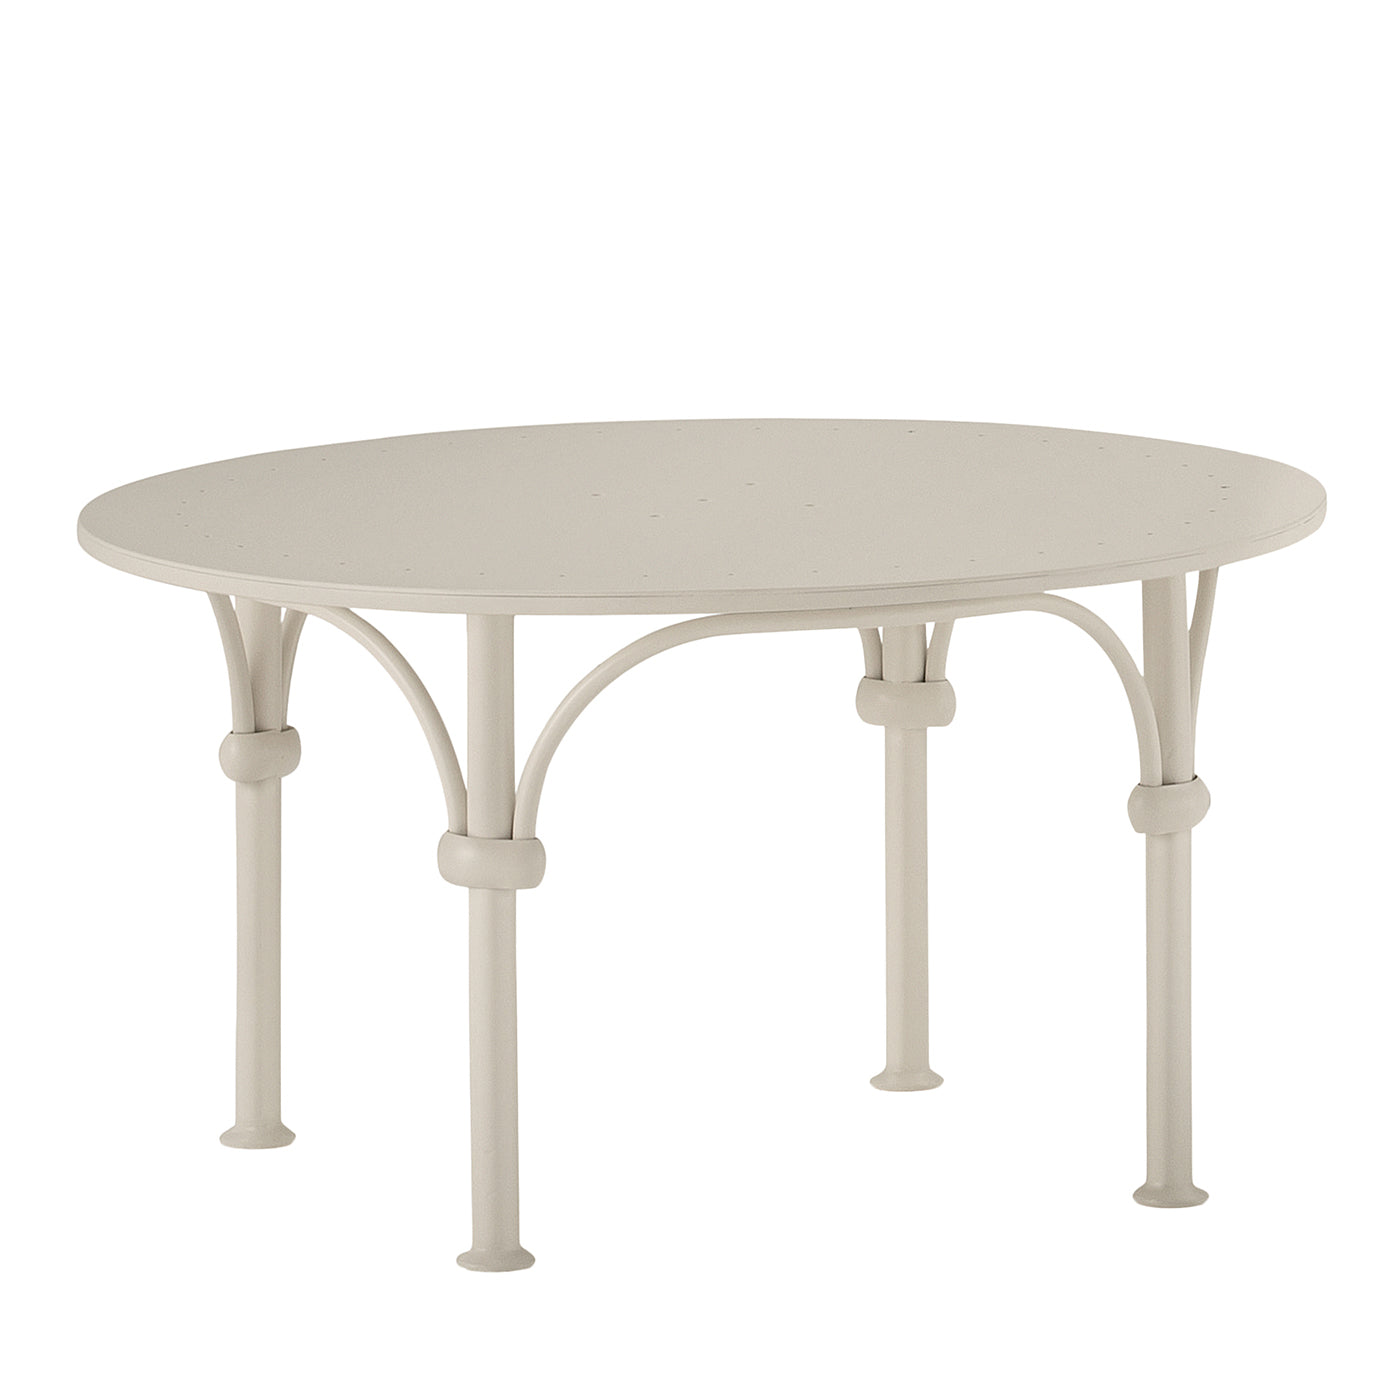 Tavolario Table basse ronde en fer forgé blanc - Vue principale